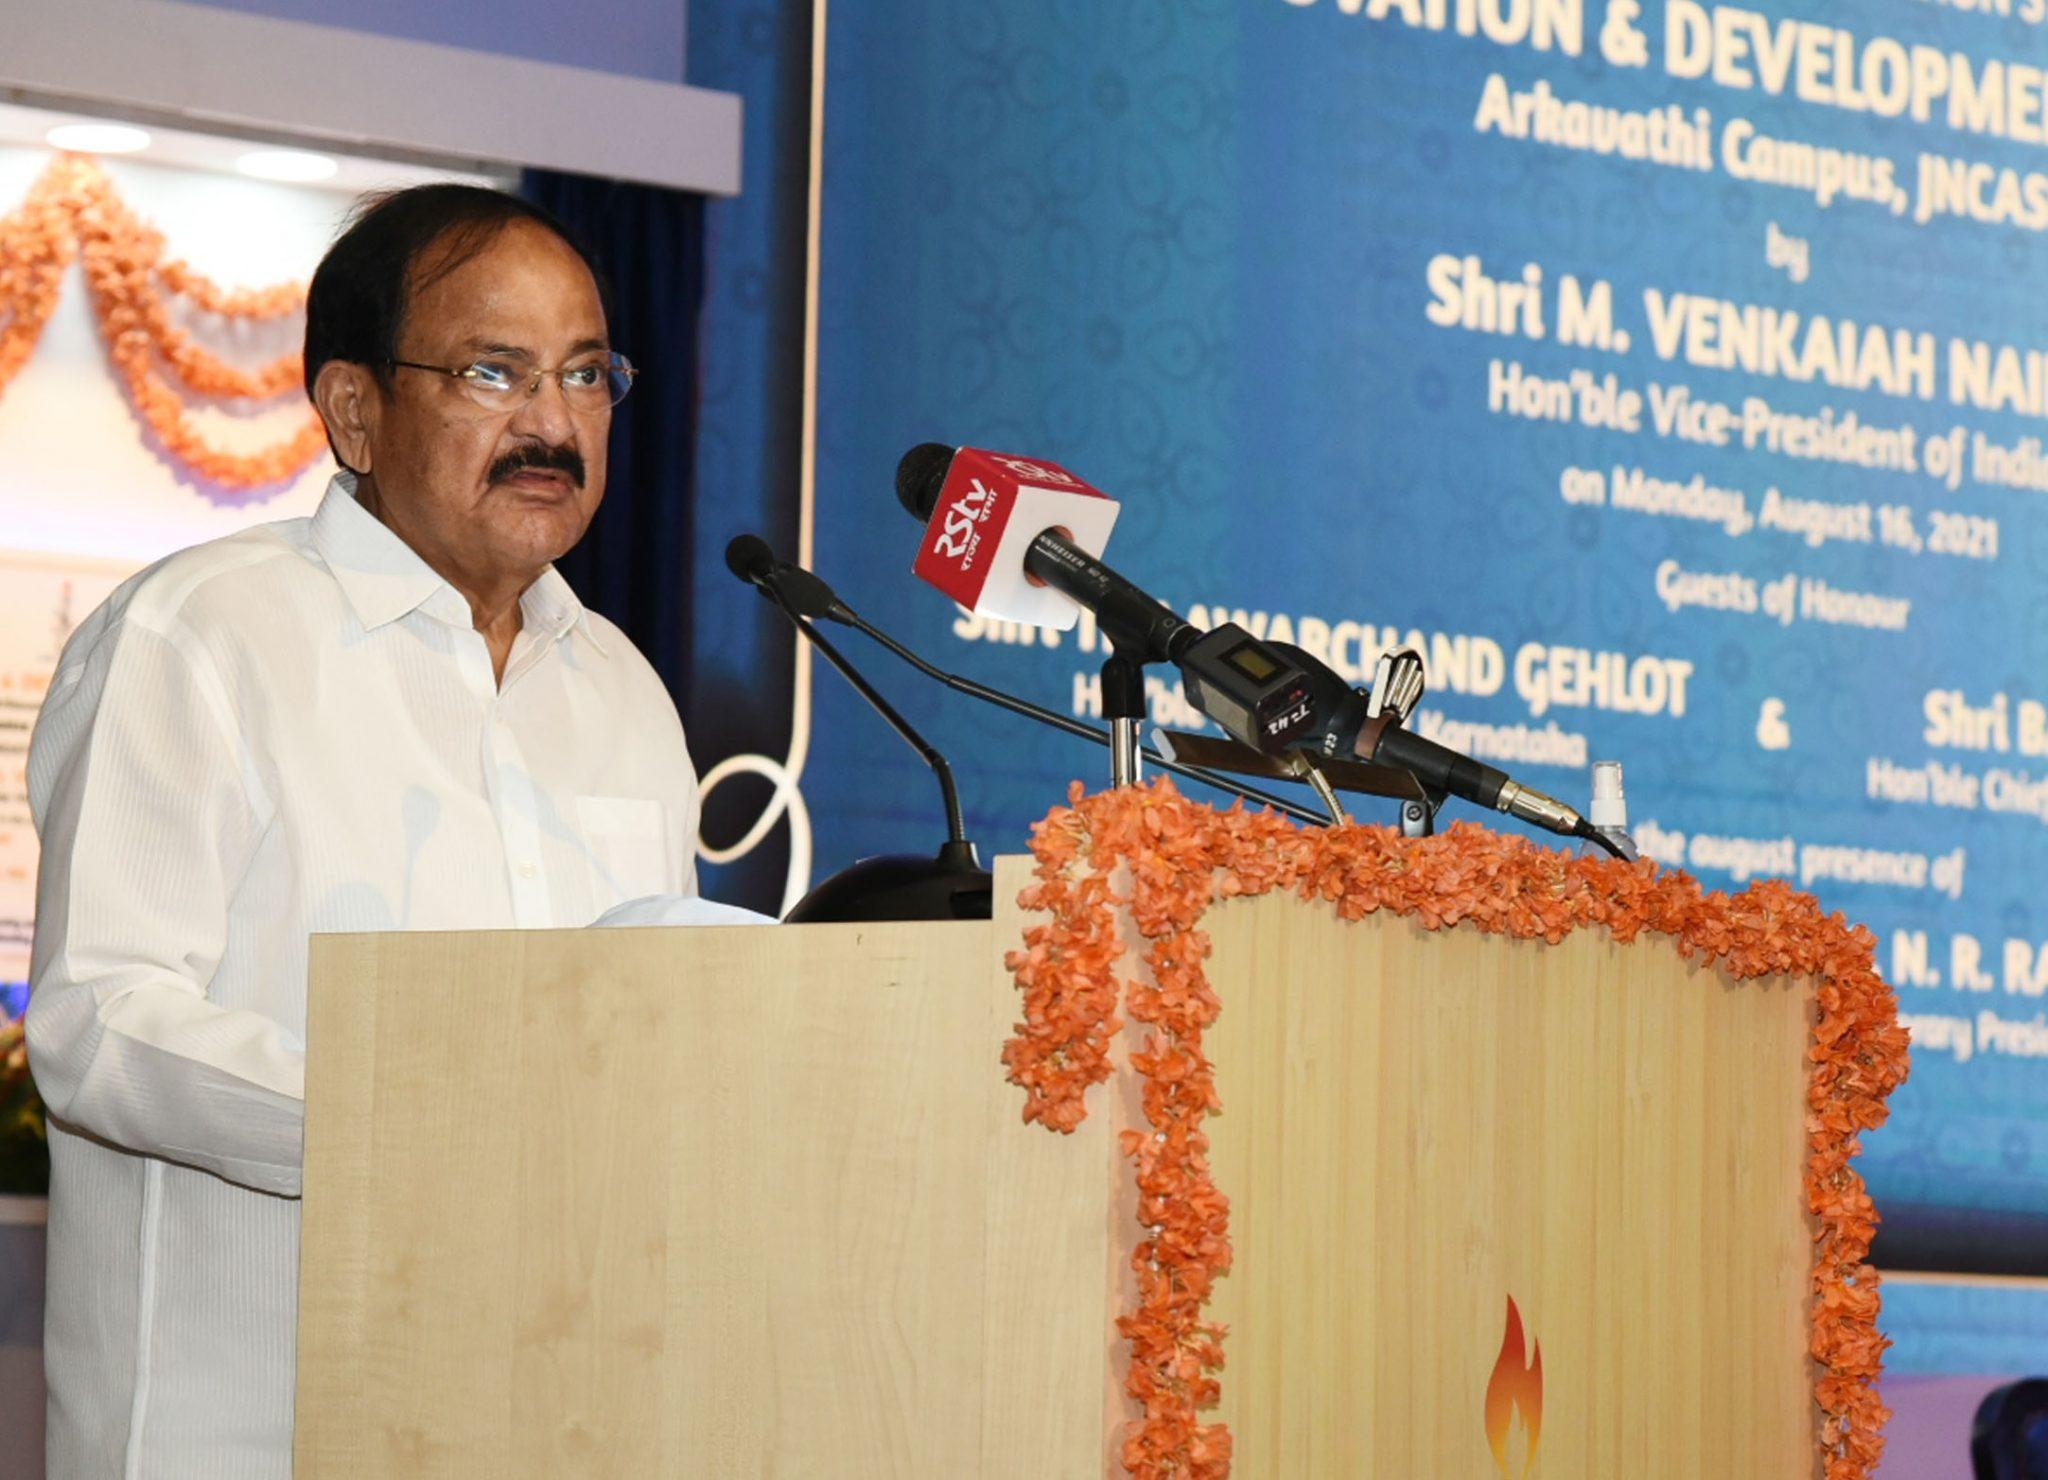 Venkaiah Naidu laid foundation stone of Innovation and Development Centre| വെങ്കയ്യ നായിഡു ഇന്നവേഷൻ ആൻഡ് ഡെവലപ്മെന്റ് സെന്ററിന്റെ ശിലാസ്ഥാപനം നിർവഹിച്ചു_30.1